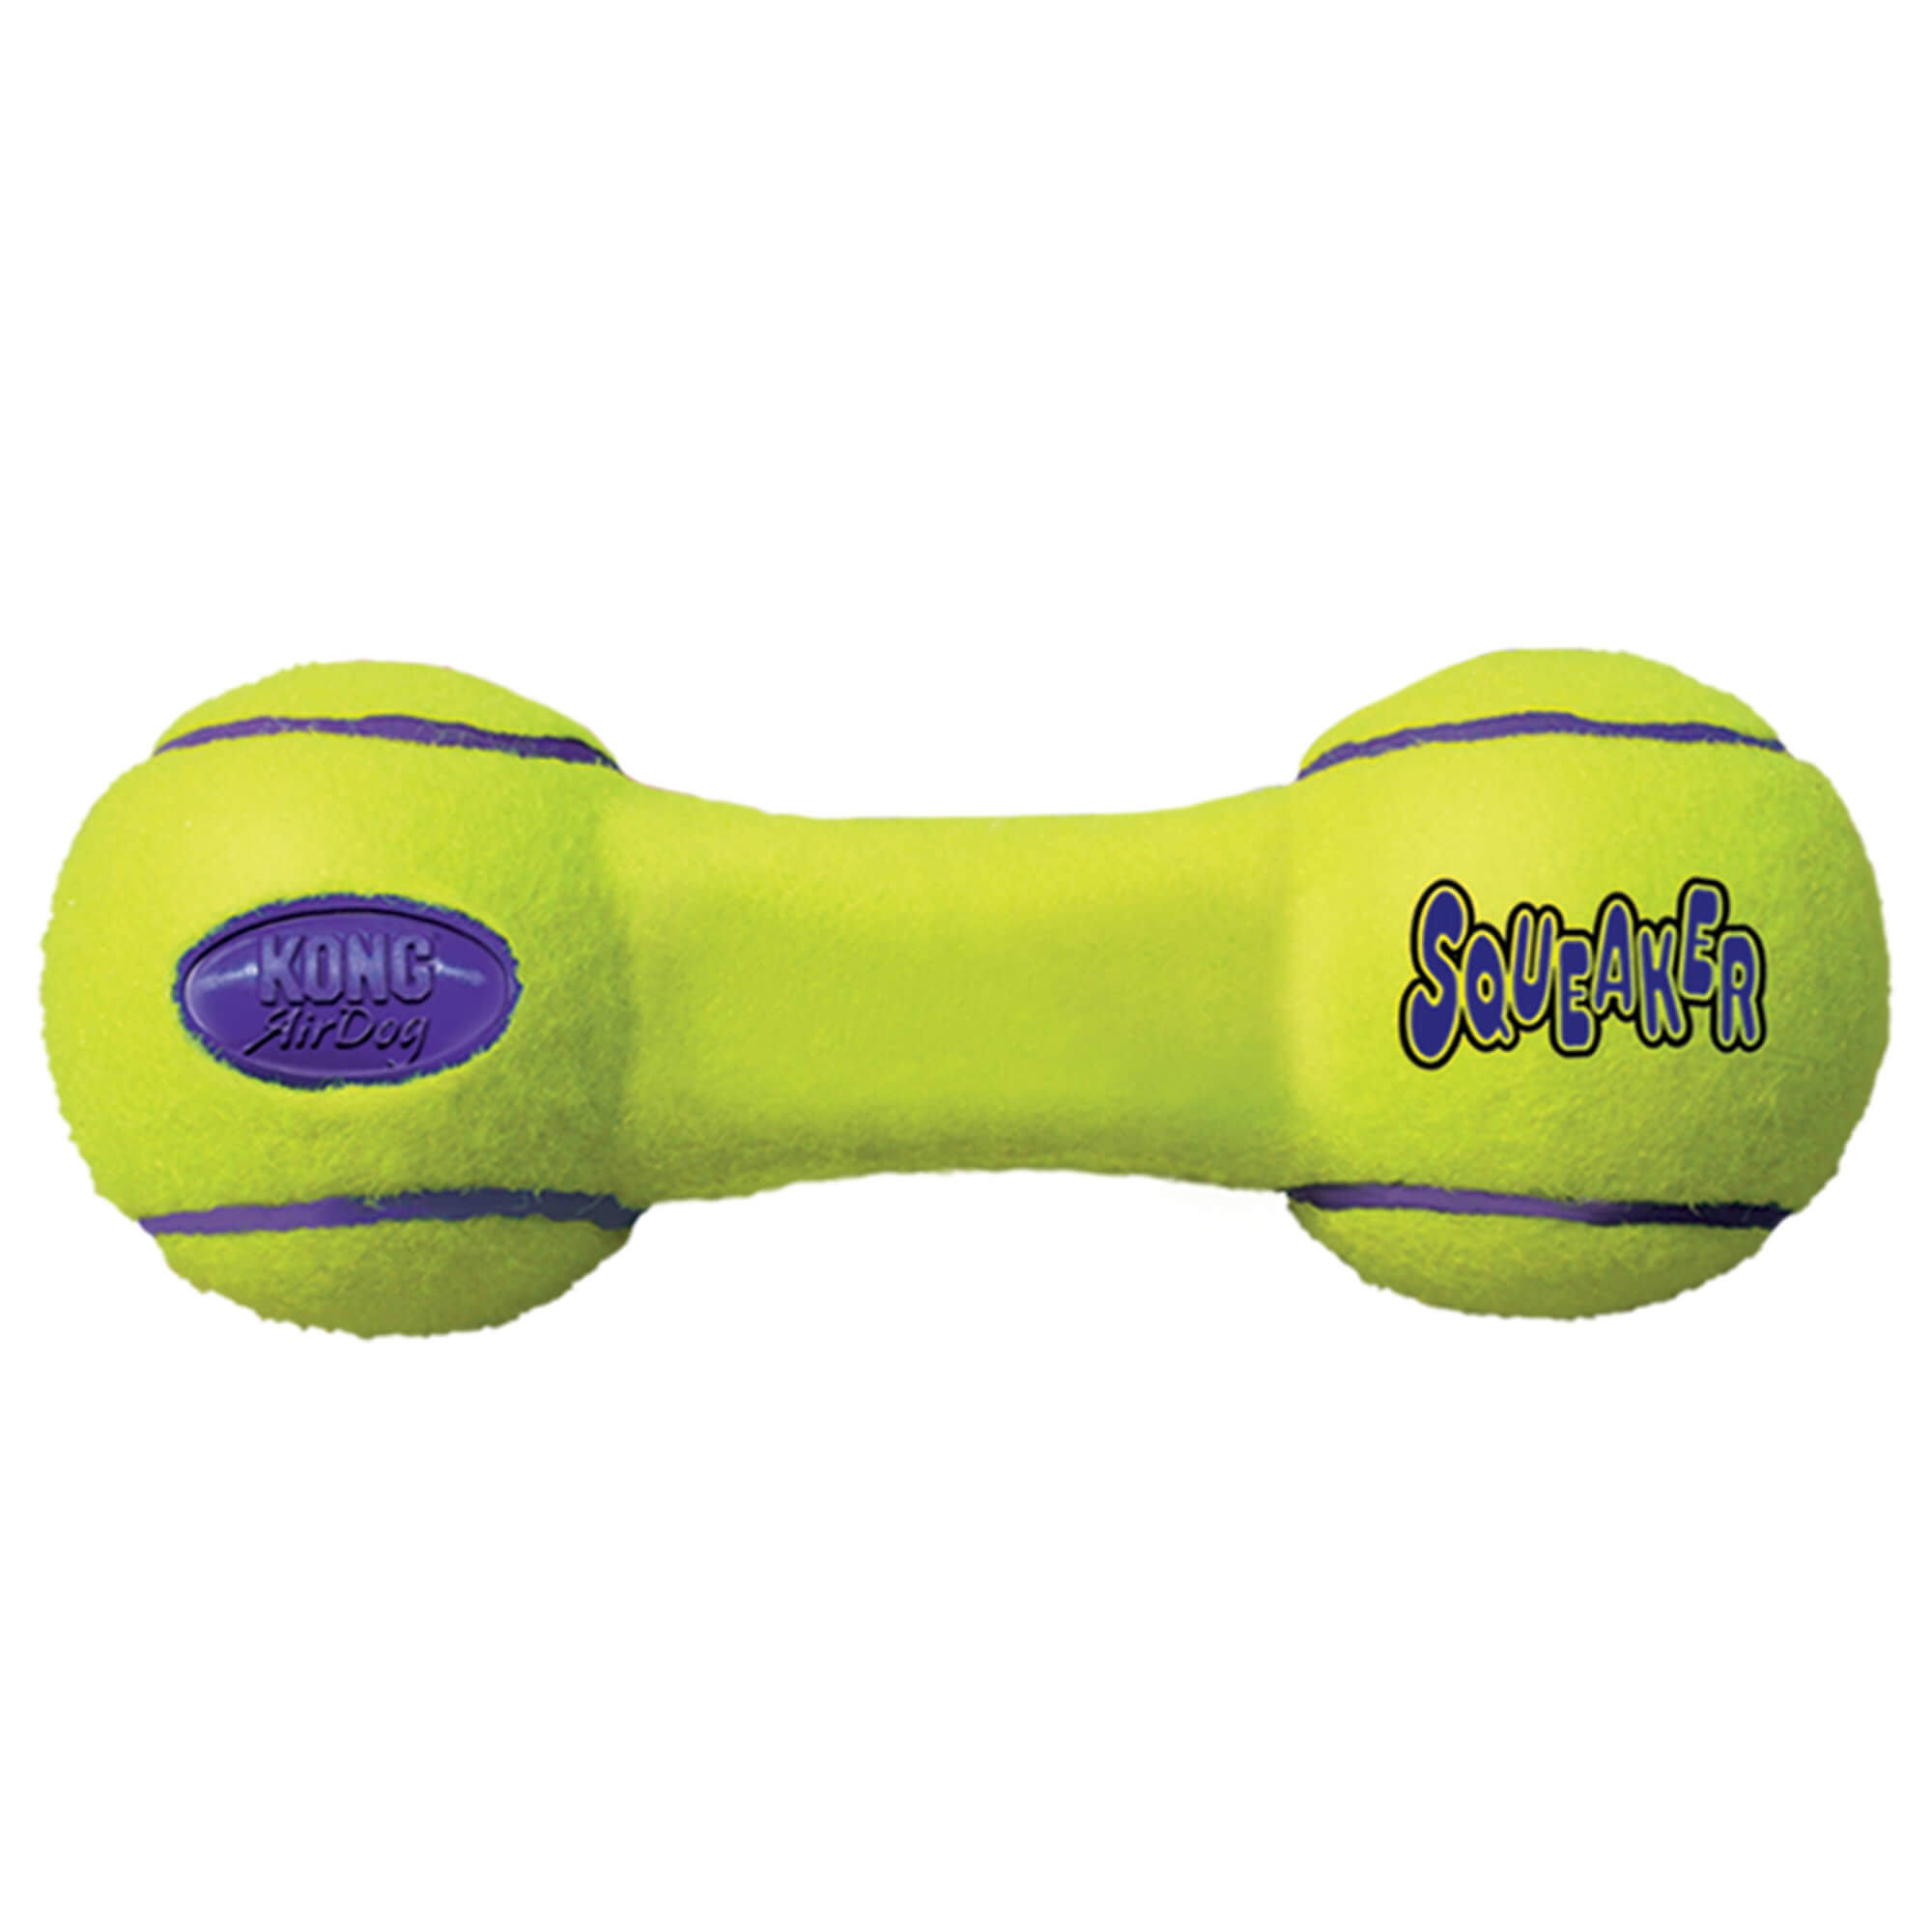 Kong Air Dog Squeaker Interactive Tennis Fetch Toy